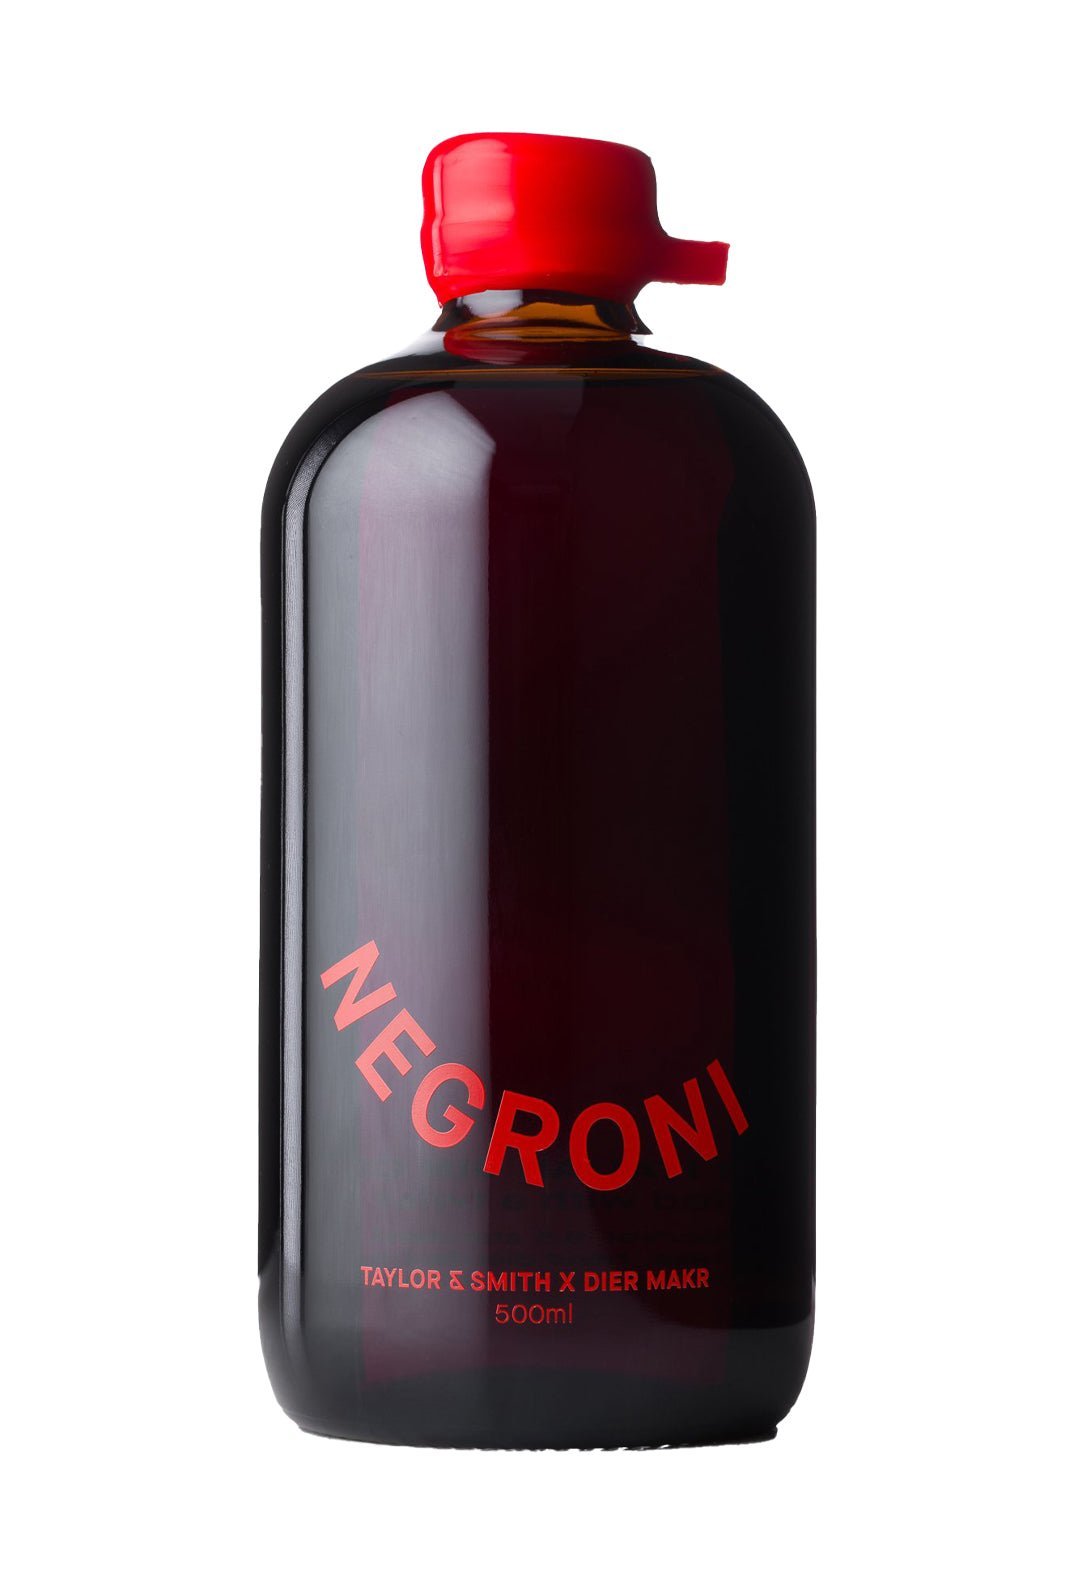 Taylor & Smith Negroni Cocktail 24% 500ml | Liquor & Spirits | Shop online at Spirits of France